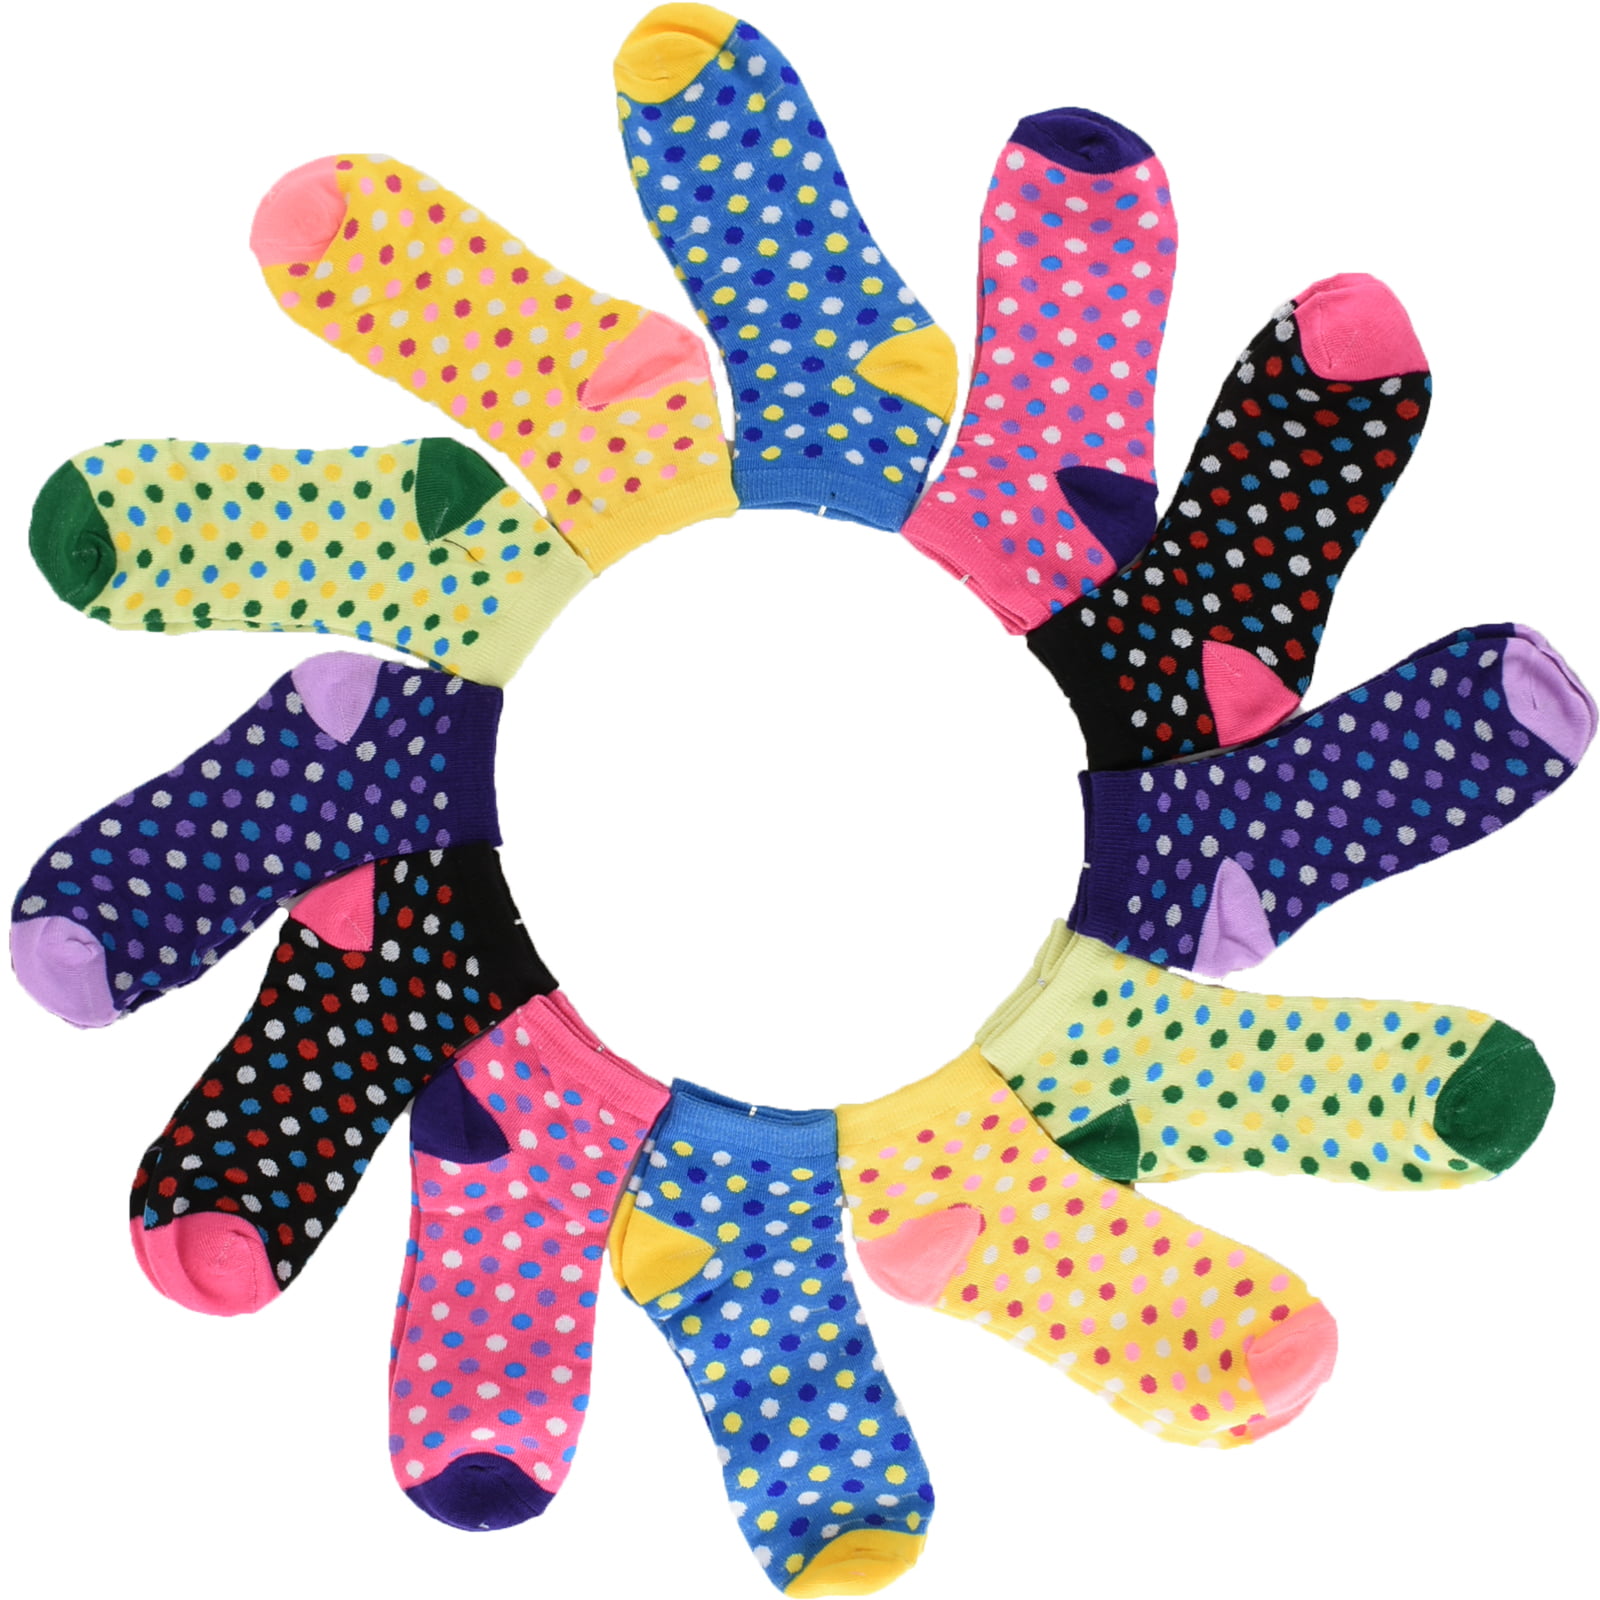 12 Pairs For Women Fashion Cotton School Casual Low Cut Socks Size 9-11 argyle 